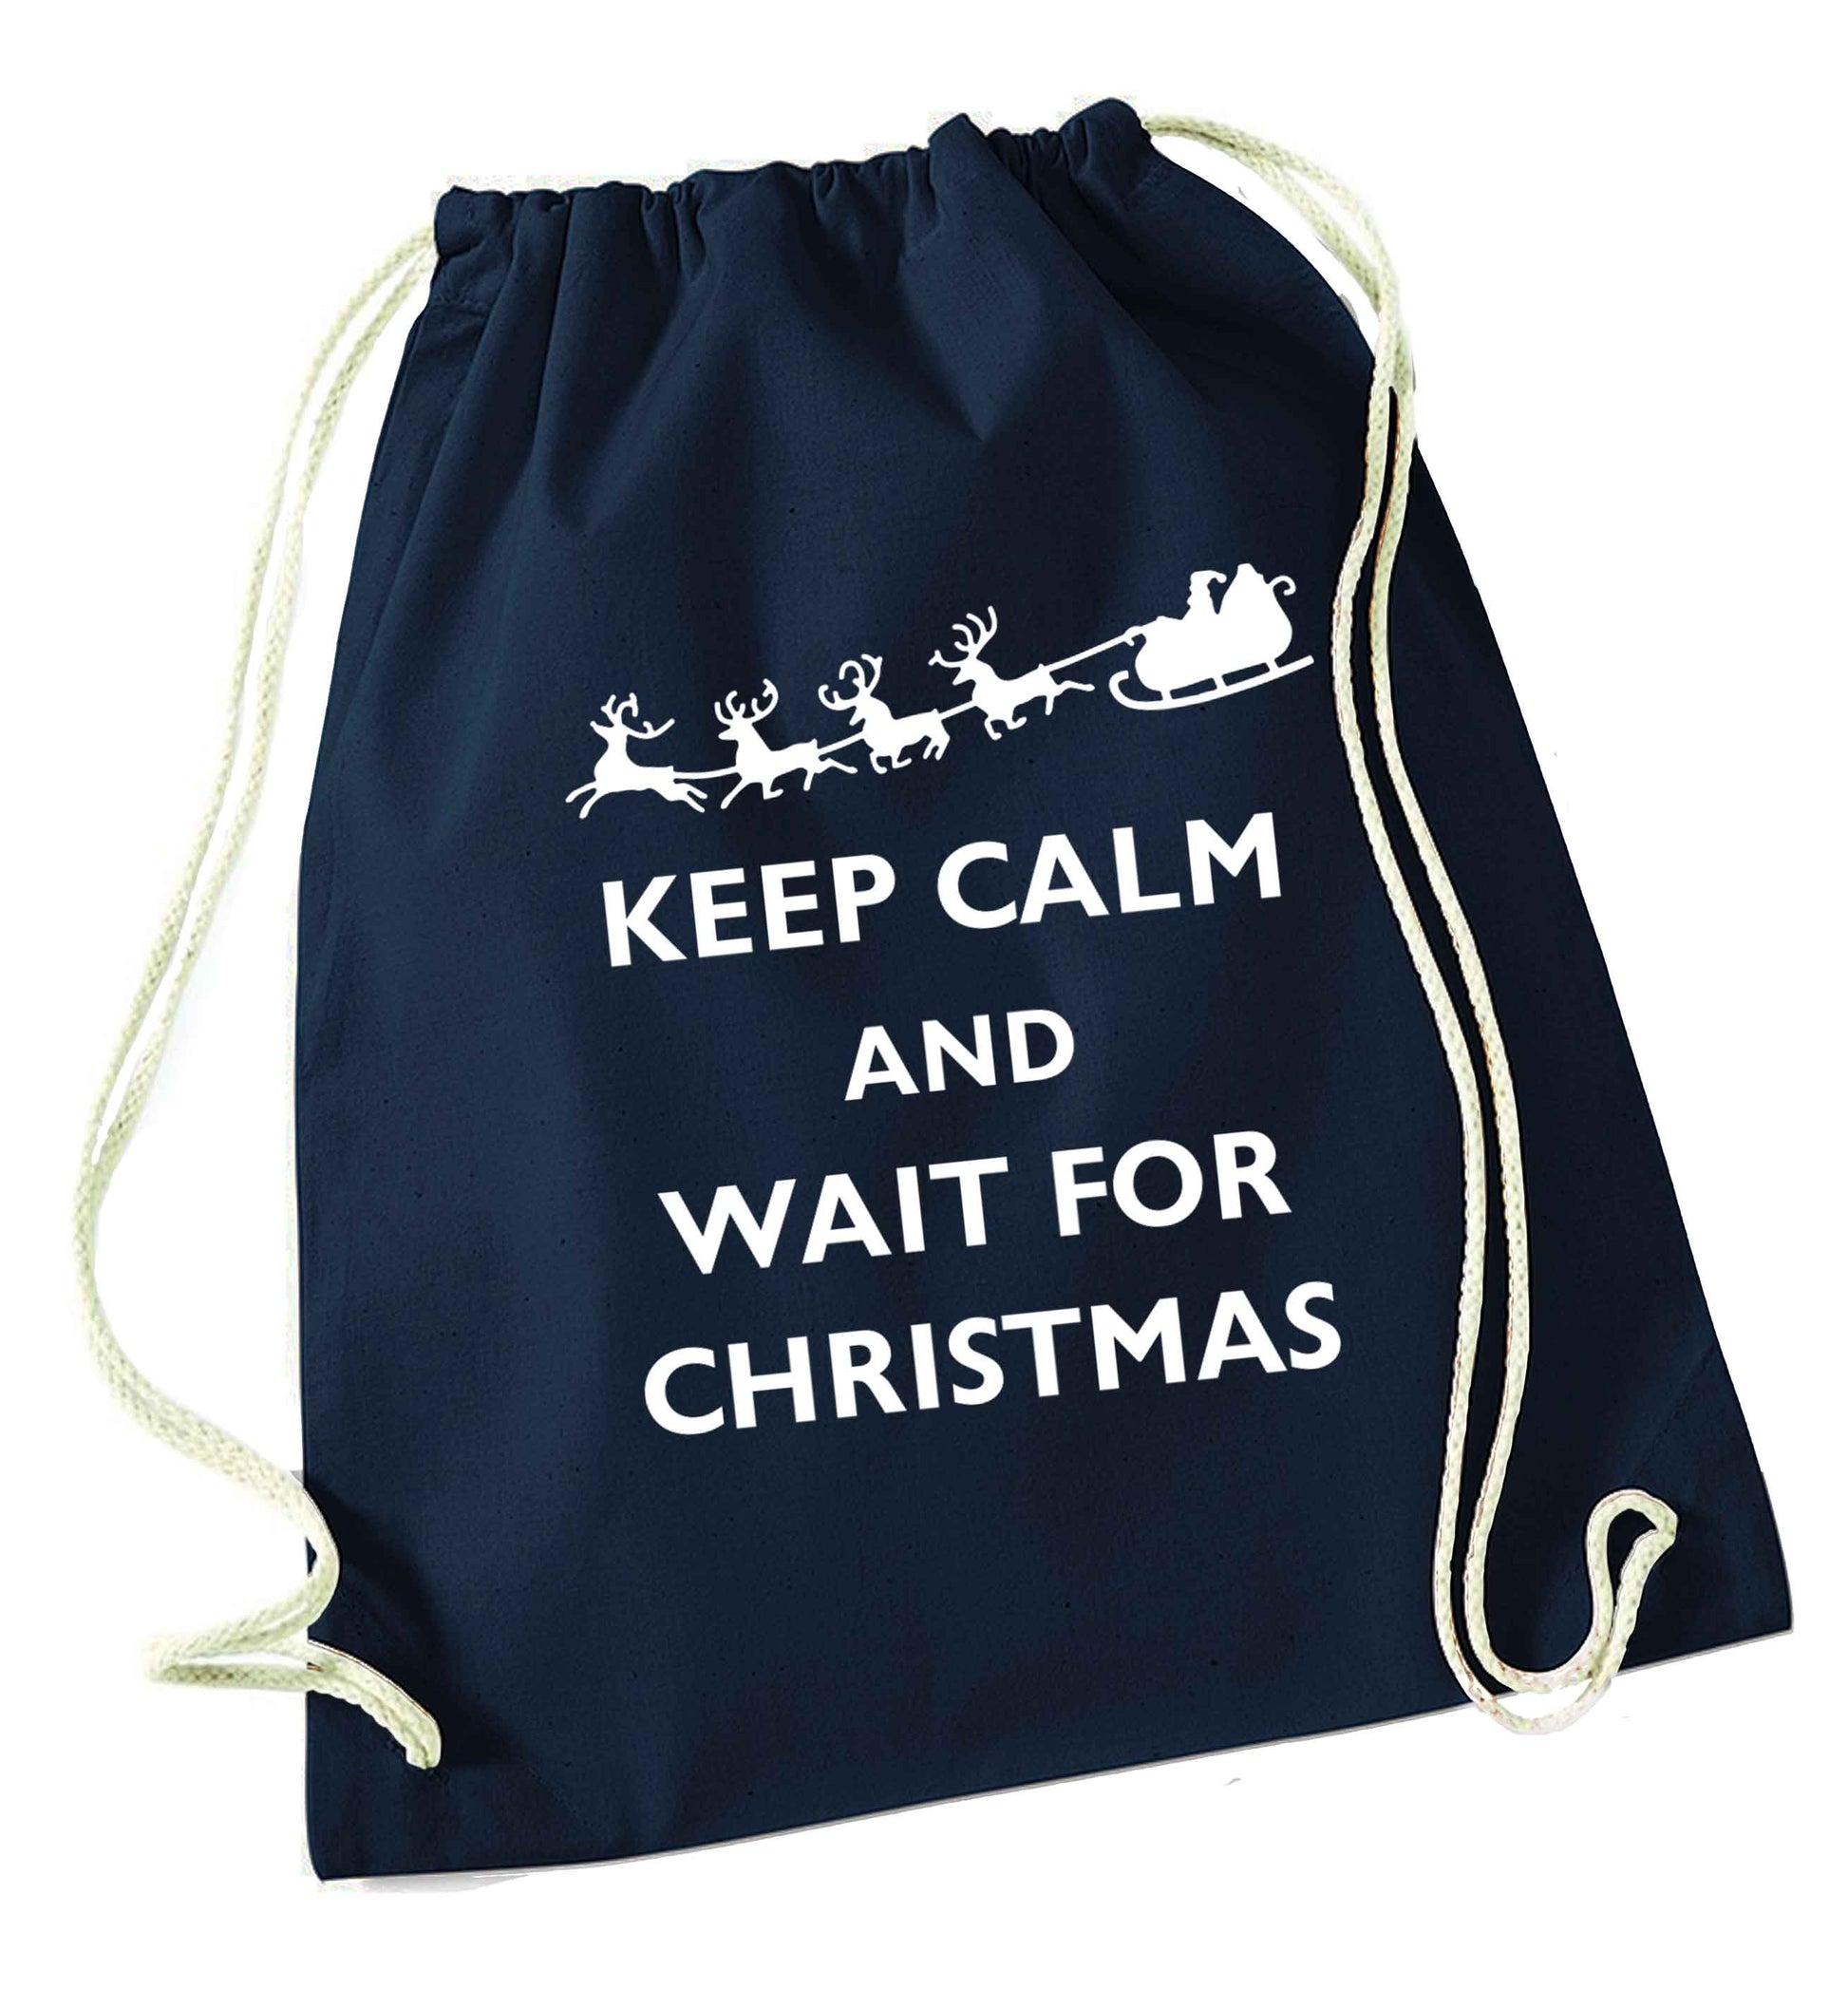 Keep calm and wait for Christmas navy drawstring bag